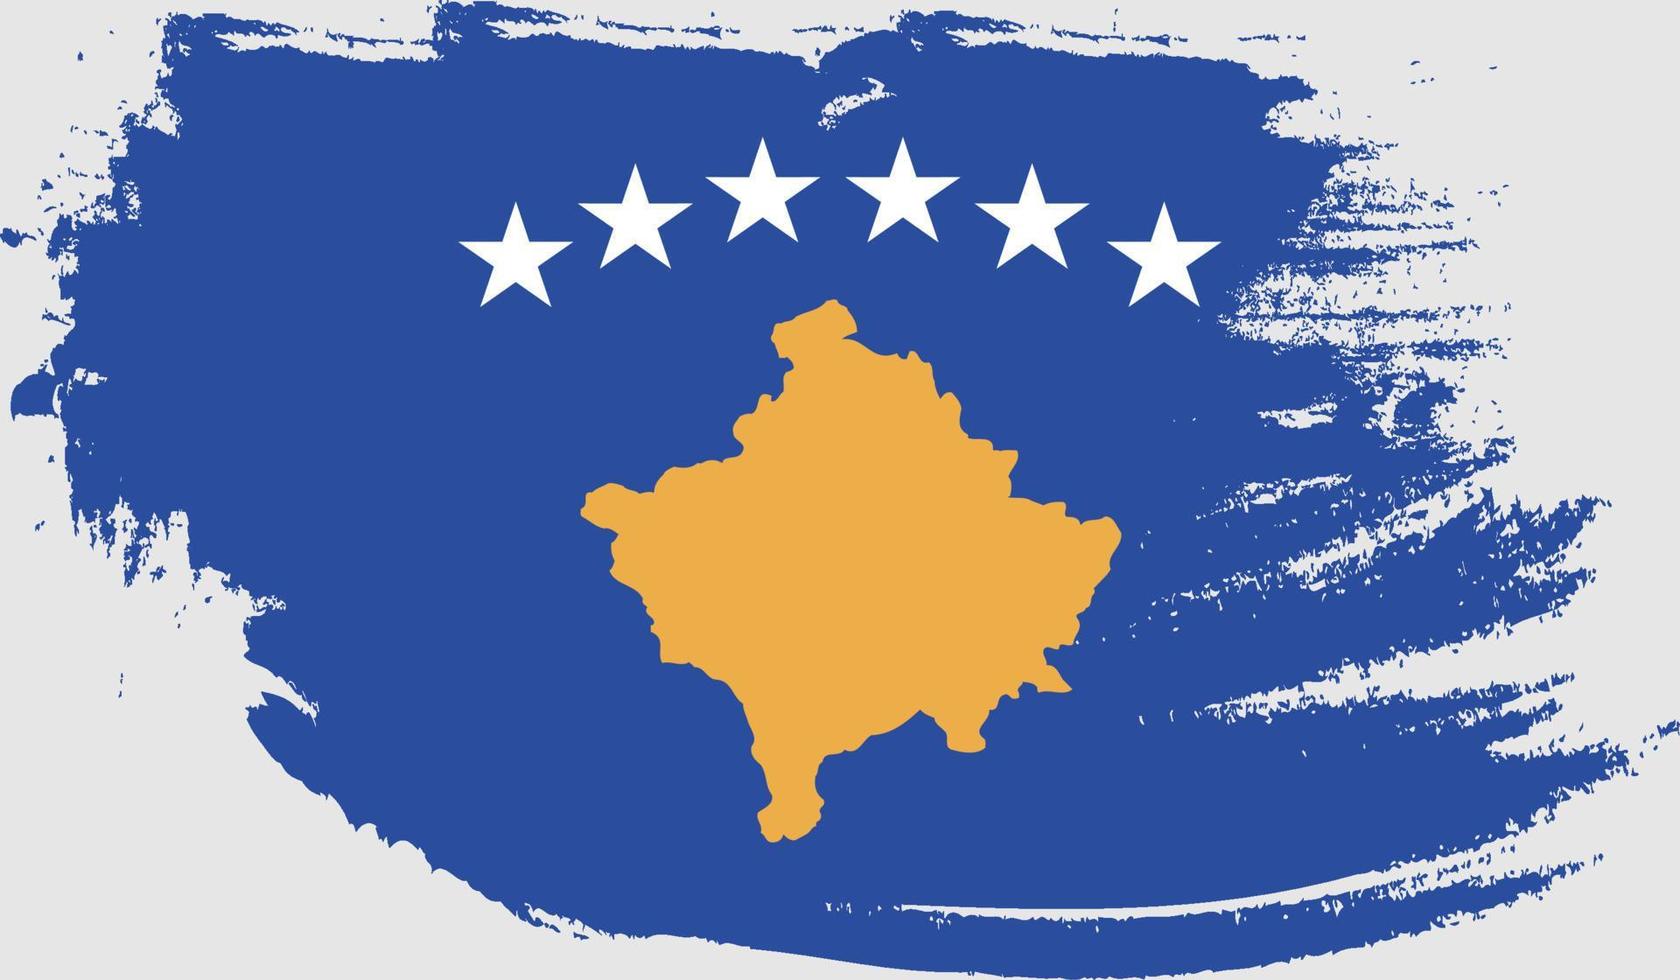 Kosovo flag with grunge texture vector